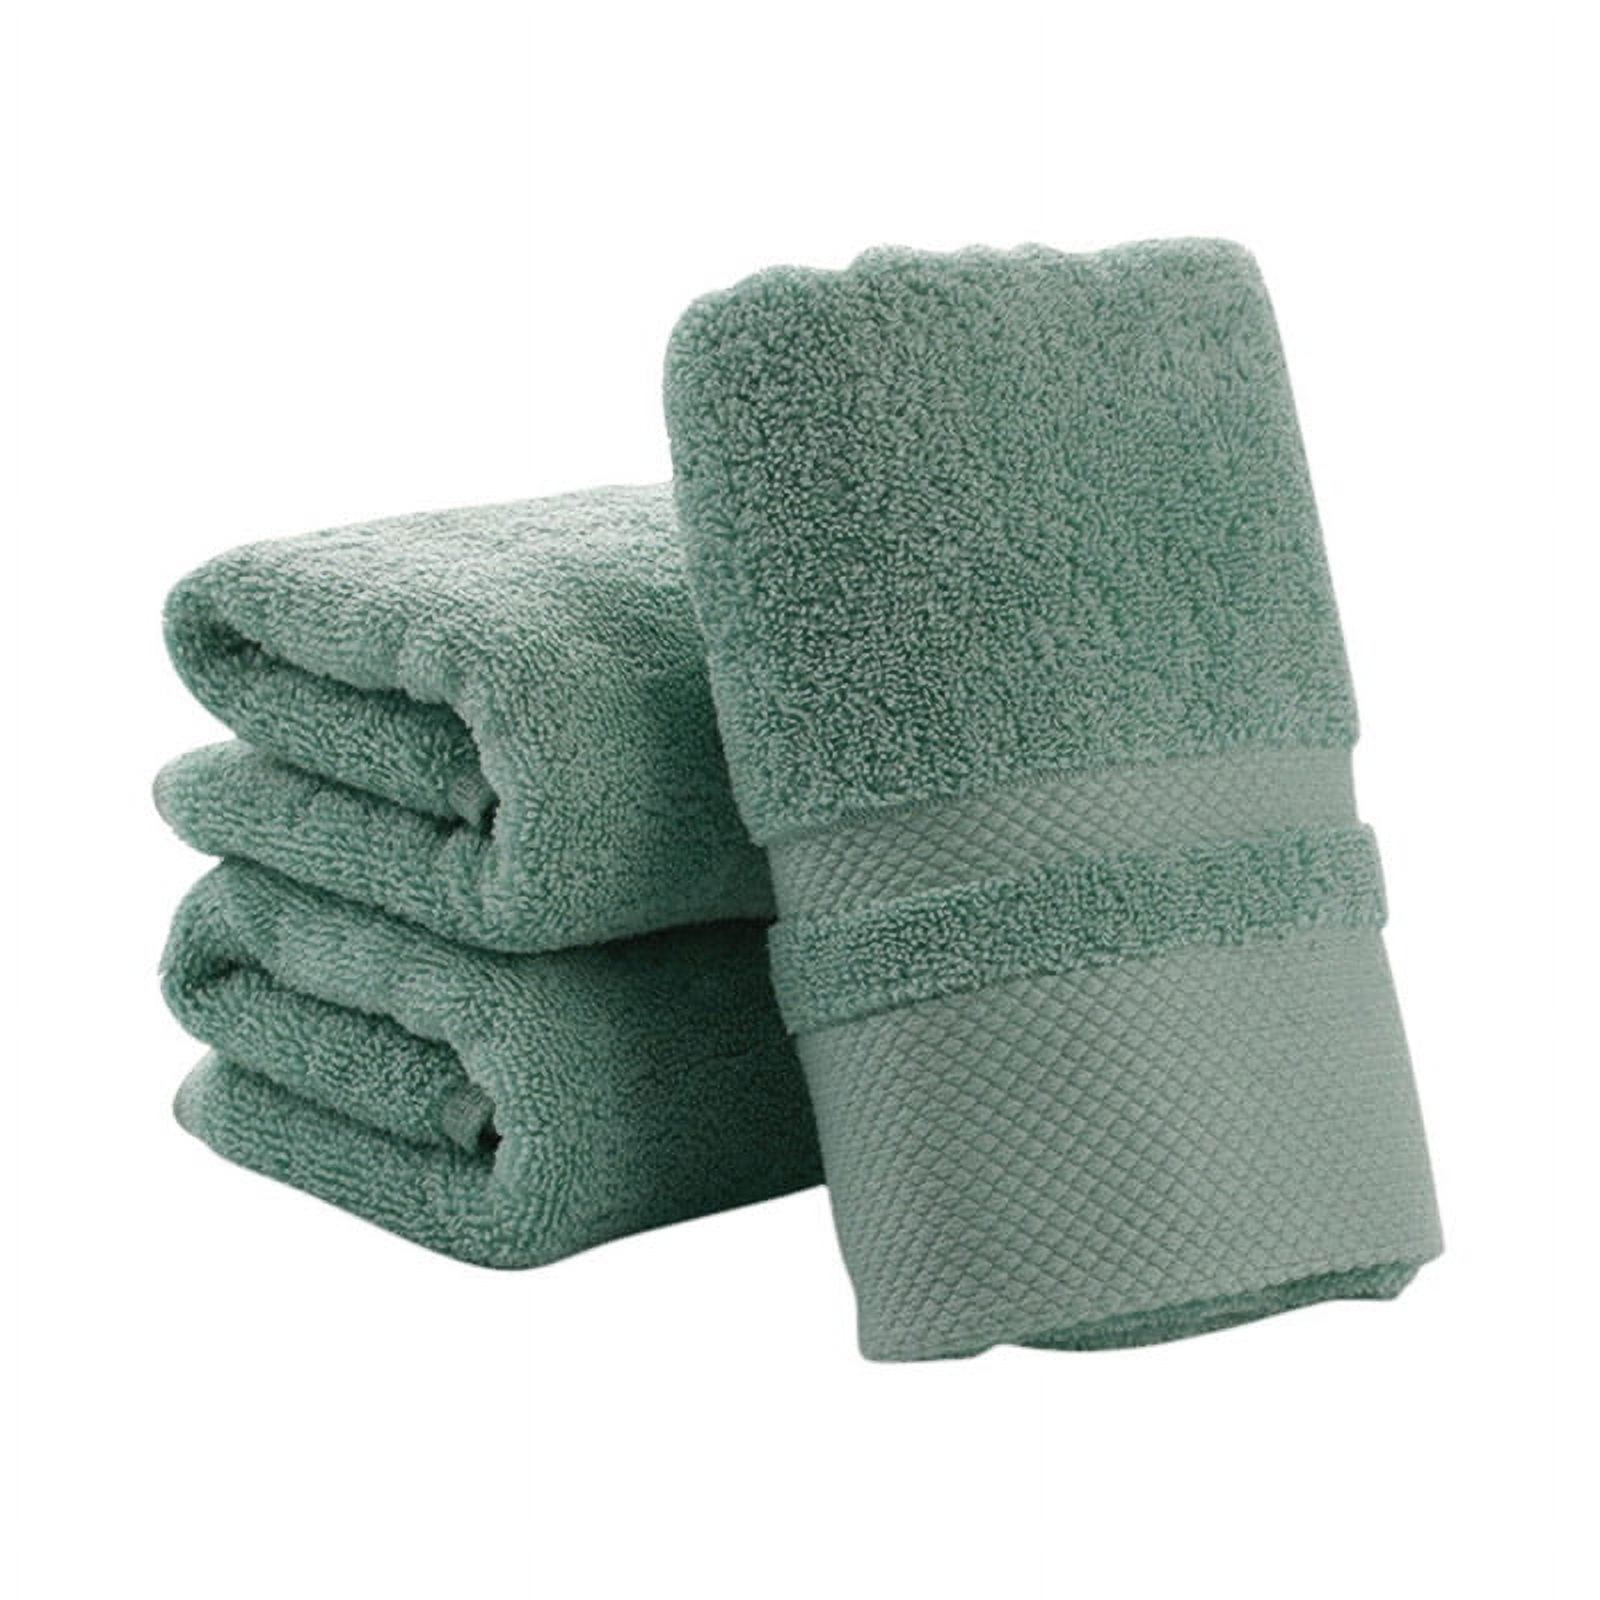 AKTI Luxury Bath Towels Set of 4, Cotton Shower Towels for Bathroom 27x54  Best Hotel Towels - SkyBlue